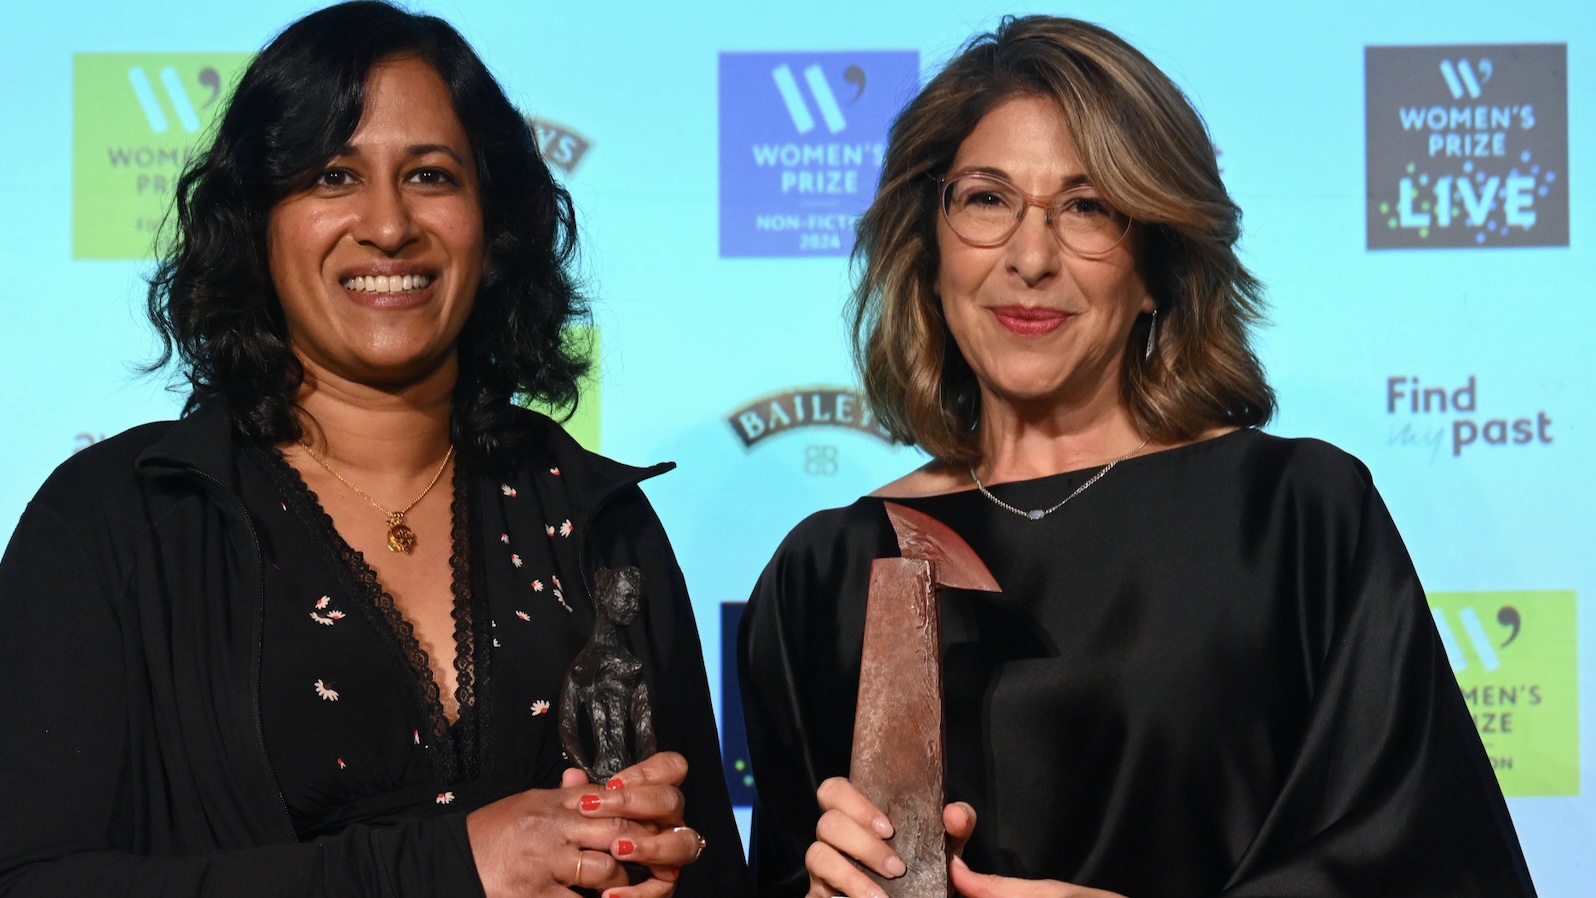 V V Ganeshananthan and Naomi Klein triumph as Women's Prize winners